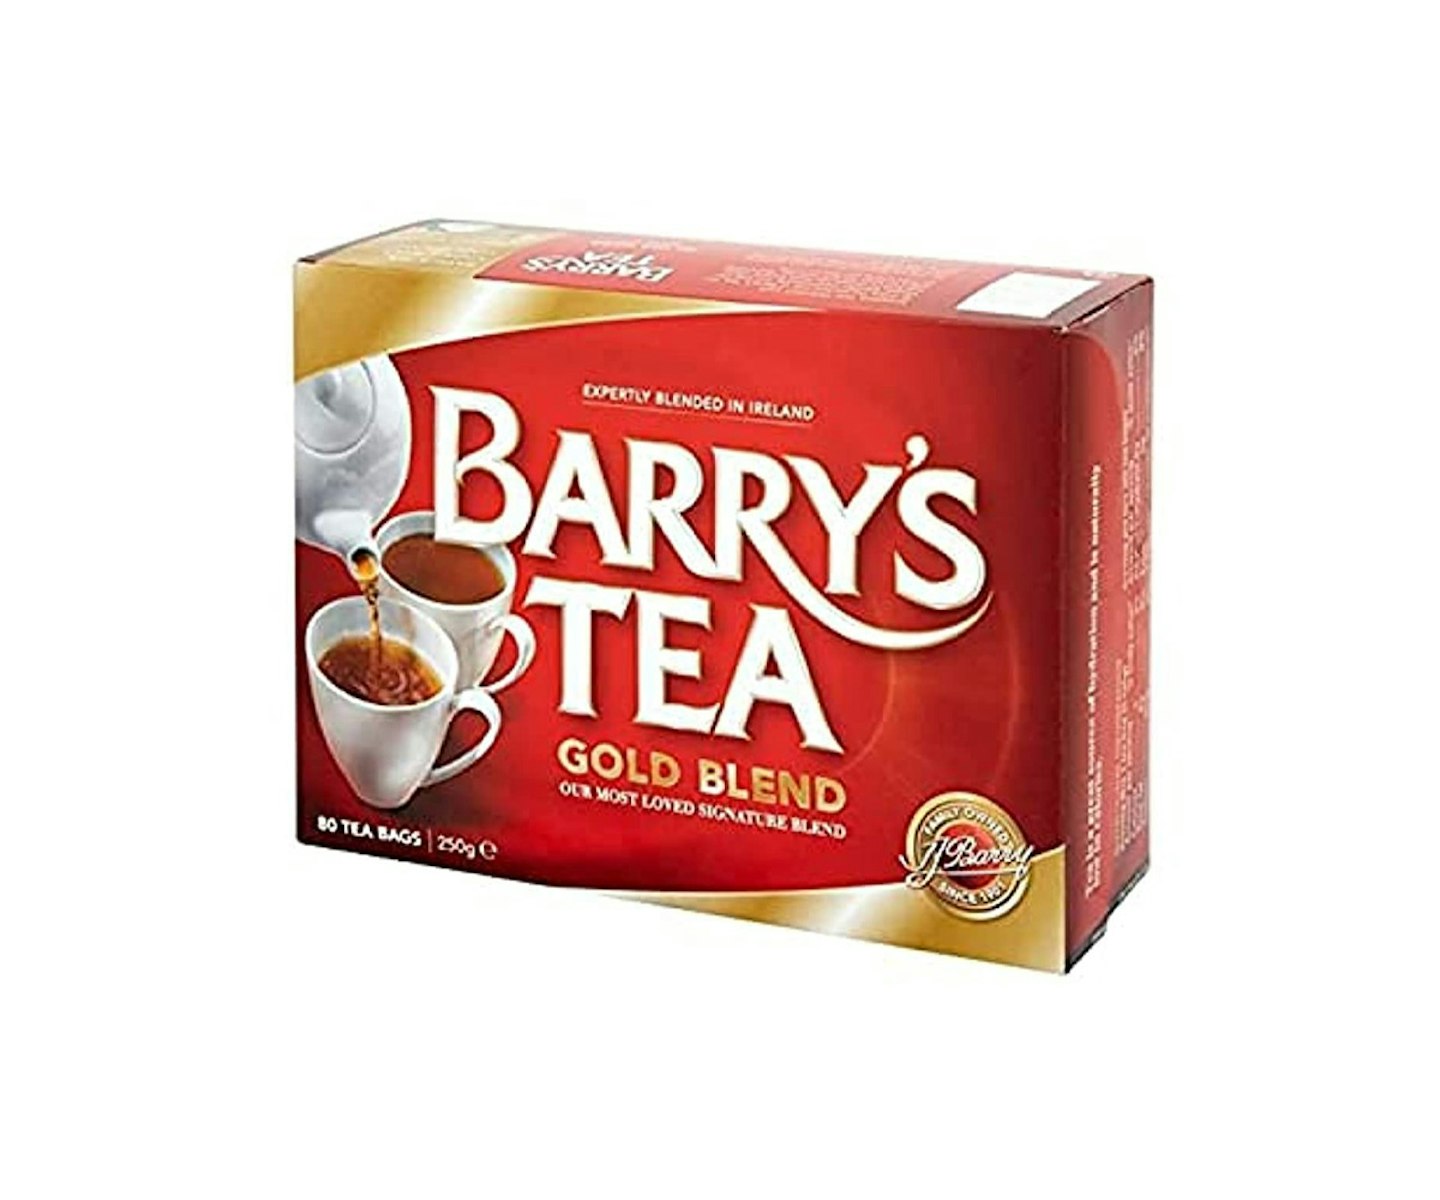 Barry's tea